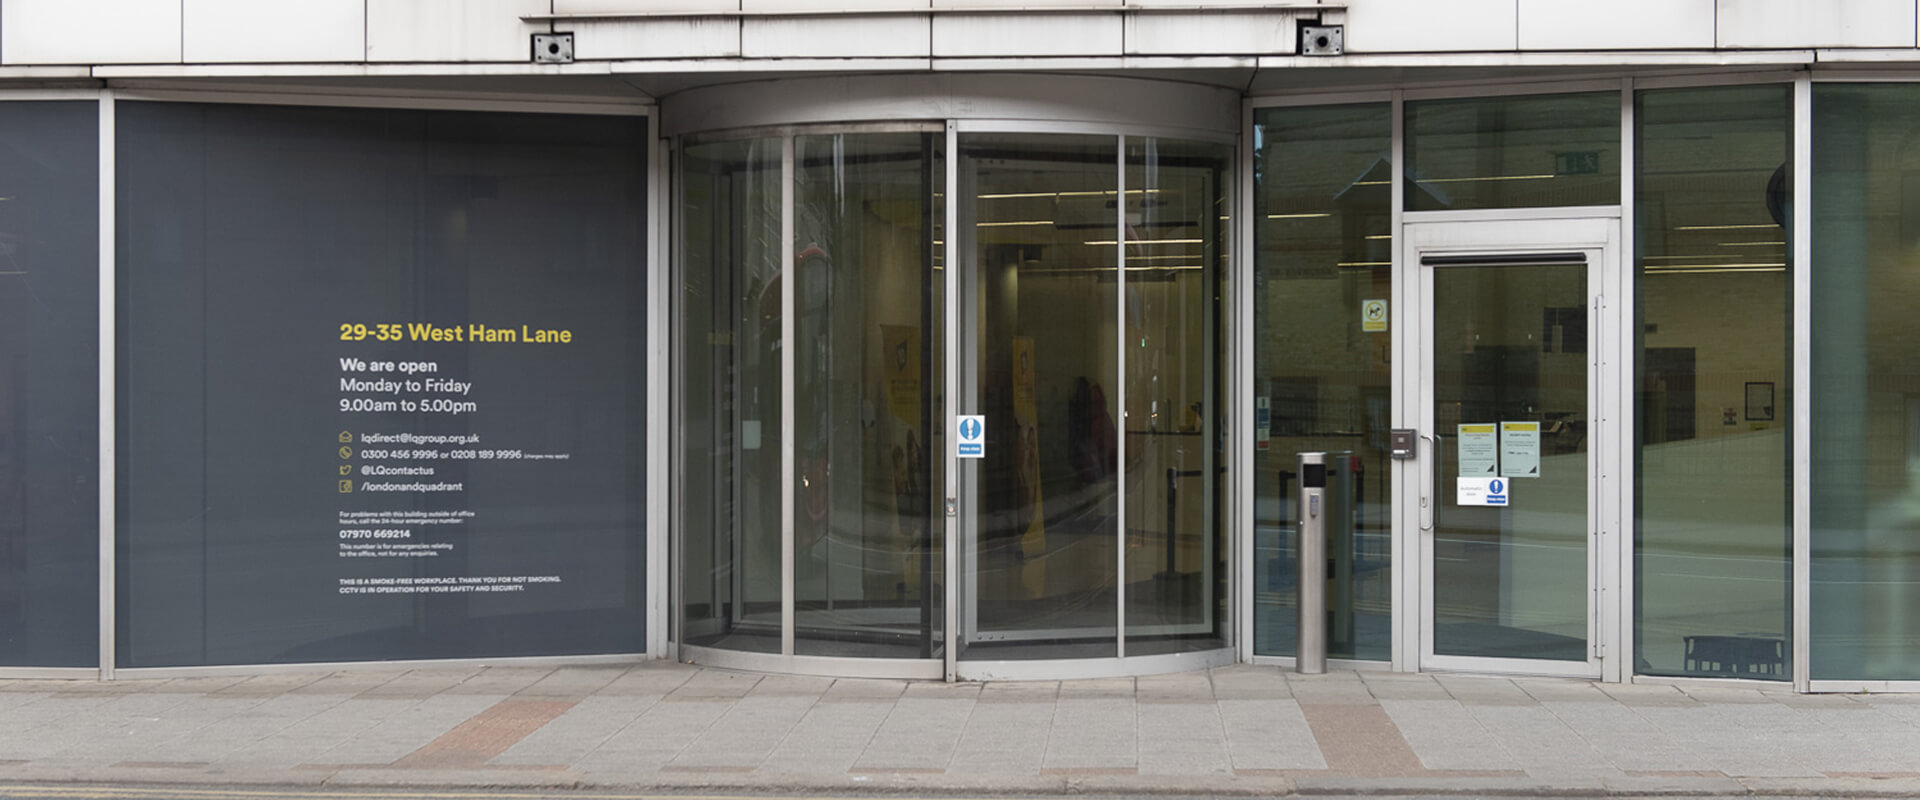 The entrance to L&Q's West Ham Lane office